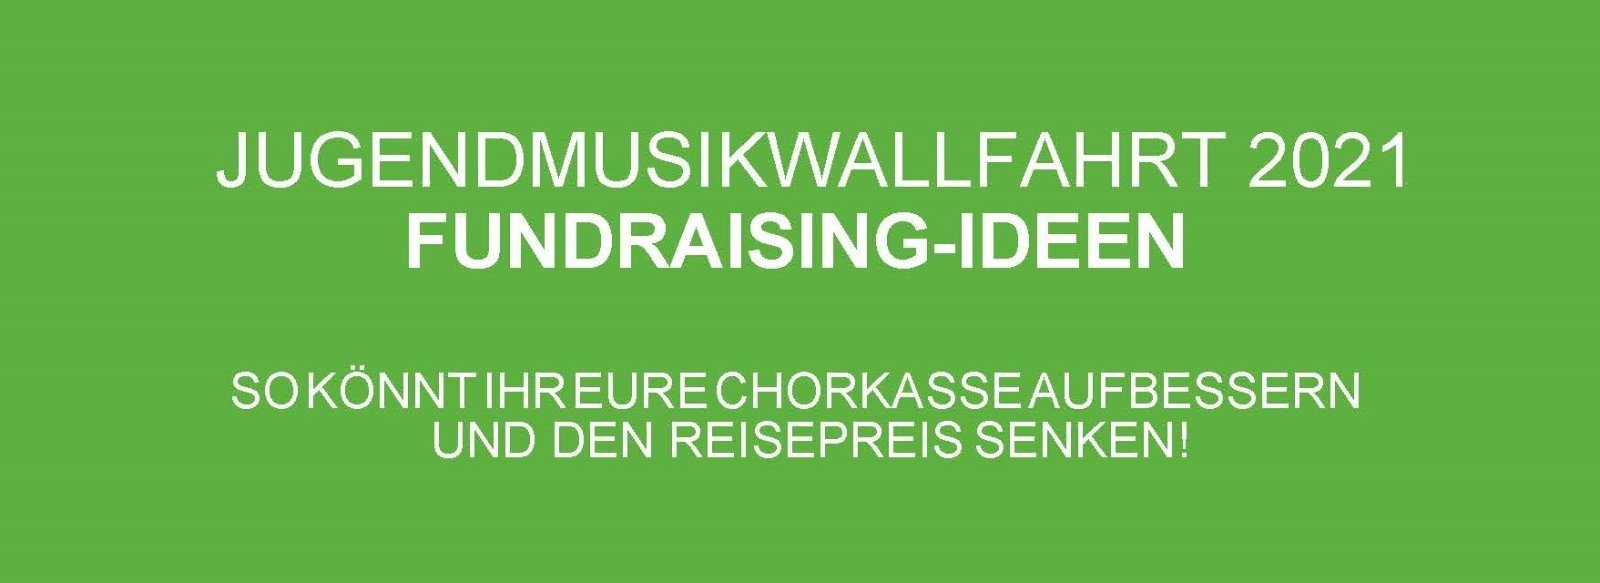 Fundraising Ideen JMW2021